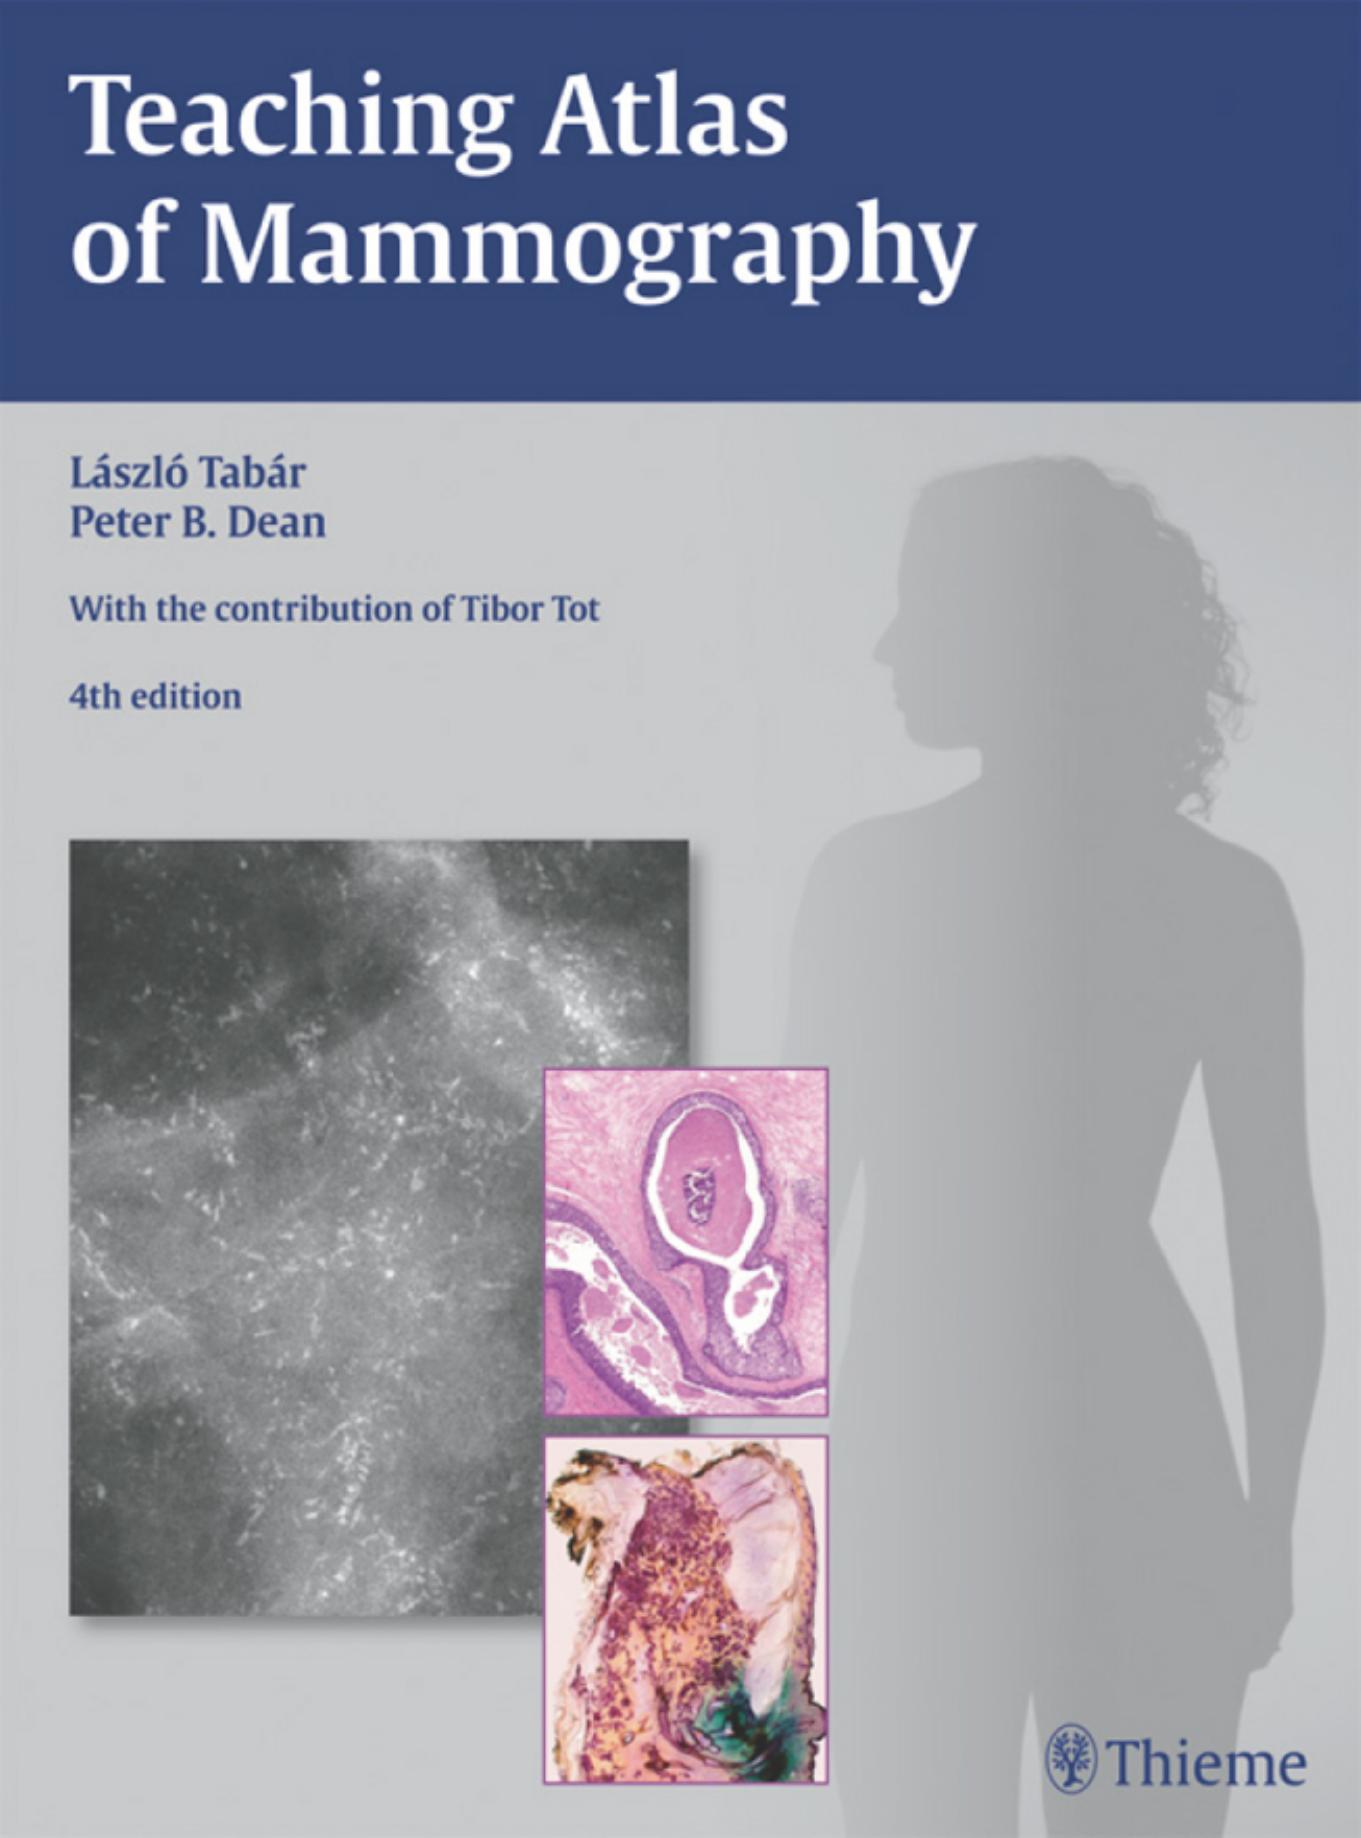 Teaching Atlas of Mammography, 4th Edition